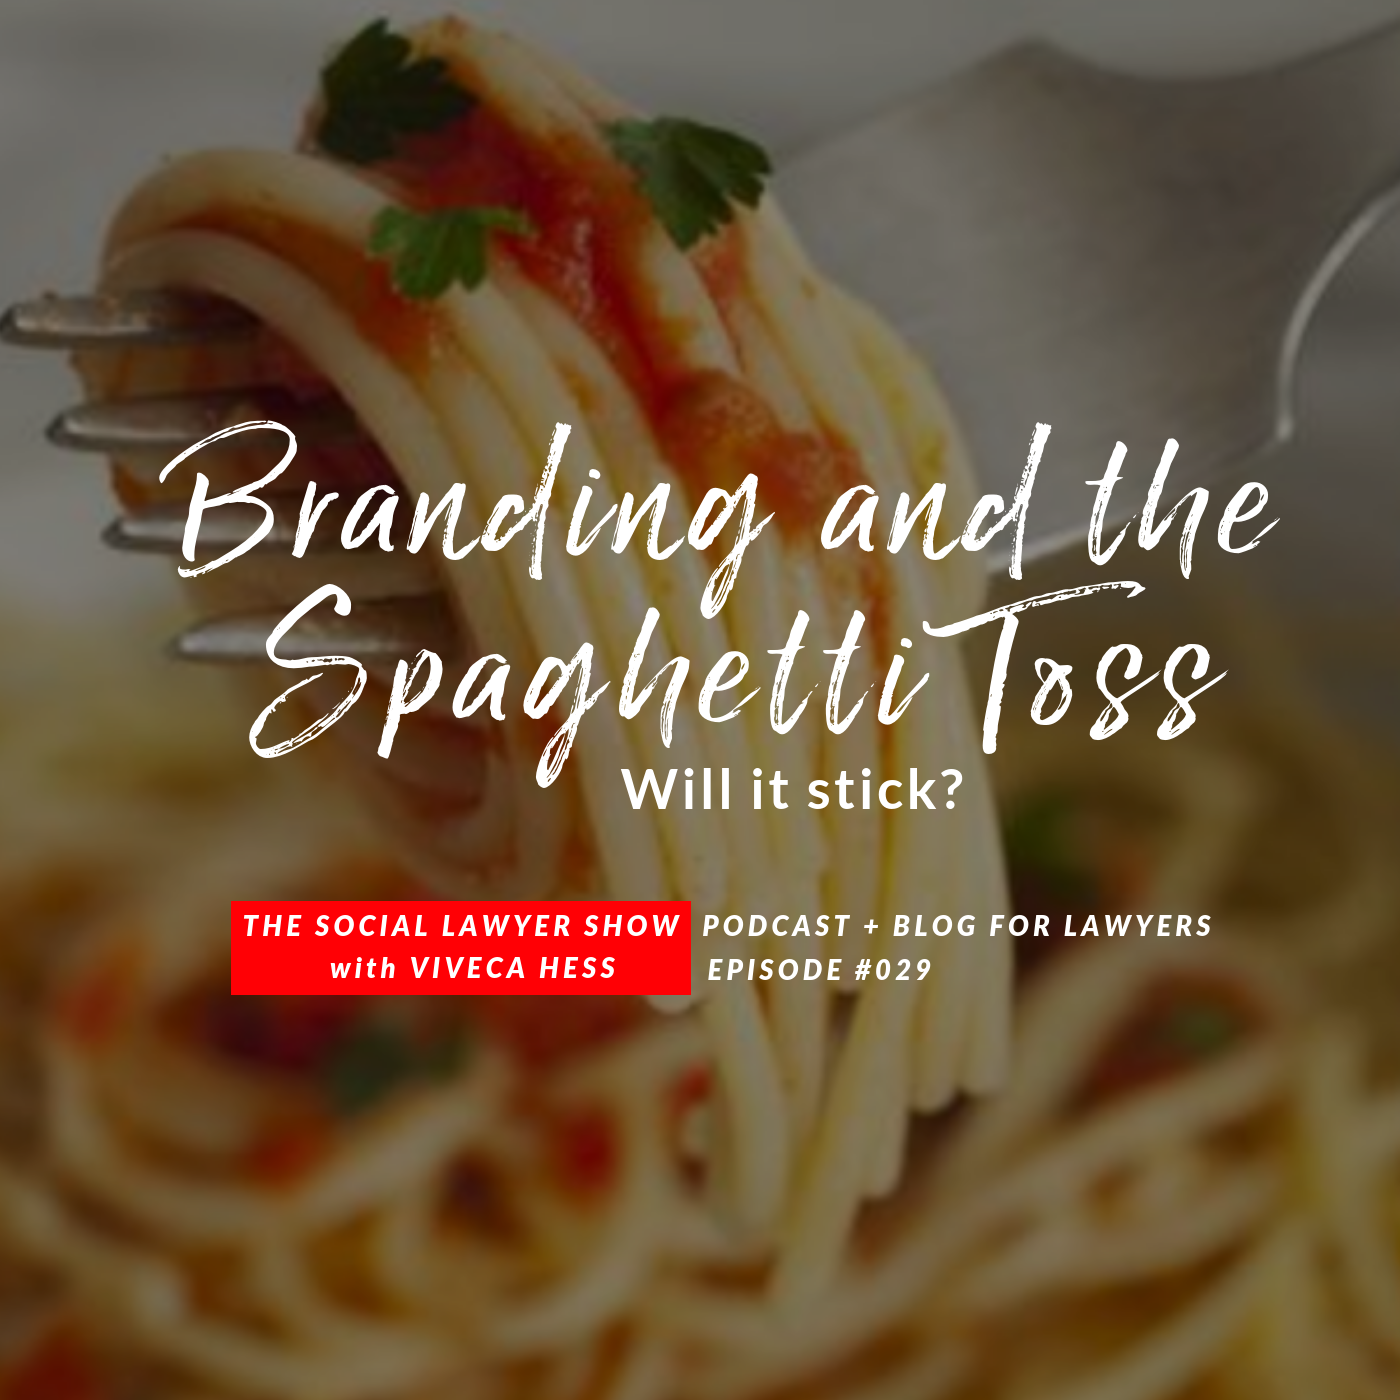 Branding and theSpaghetti Toss Part 1